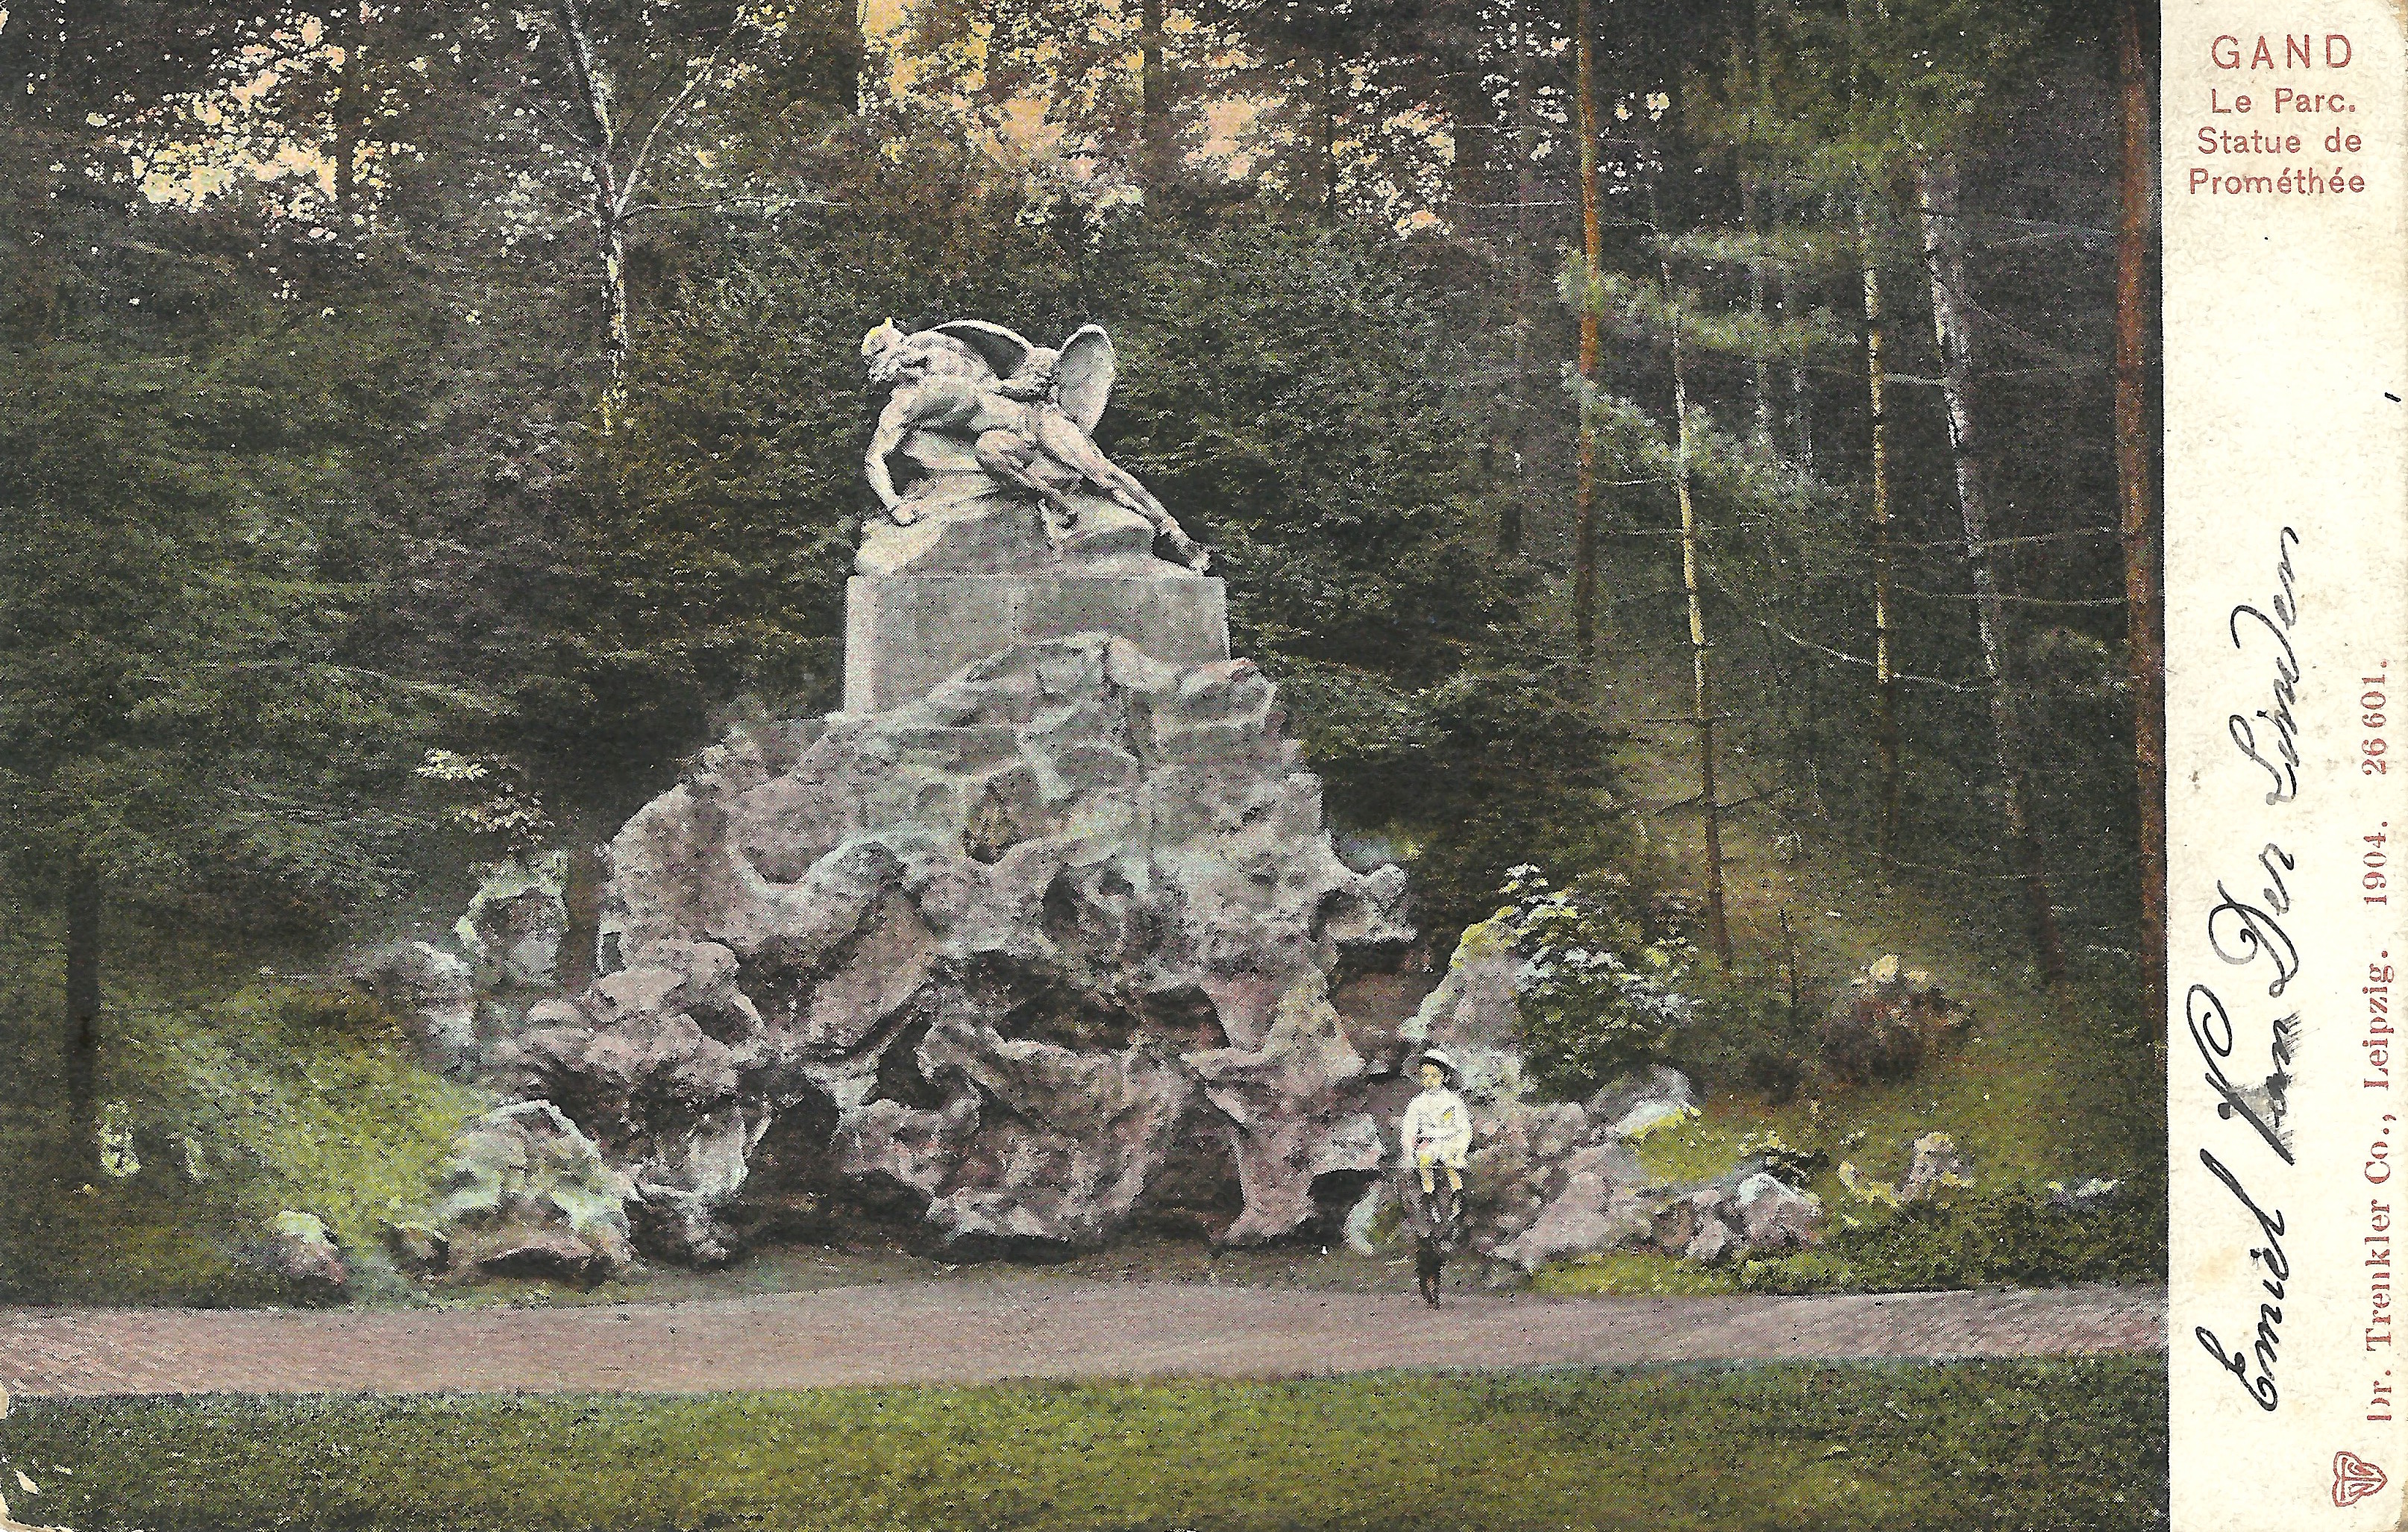 Gand Le Parc de Promethee 9 October 1908